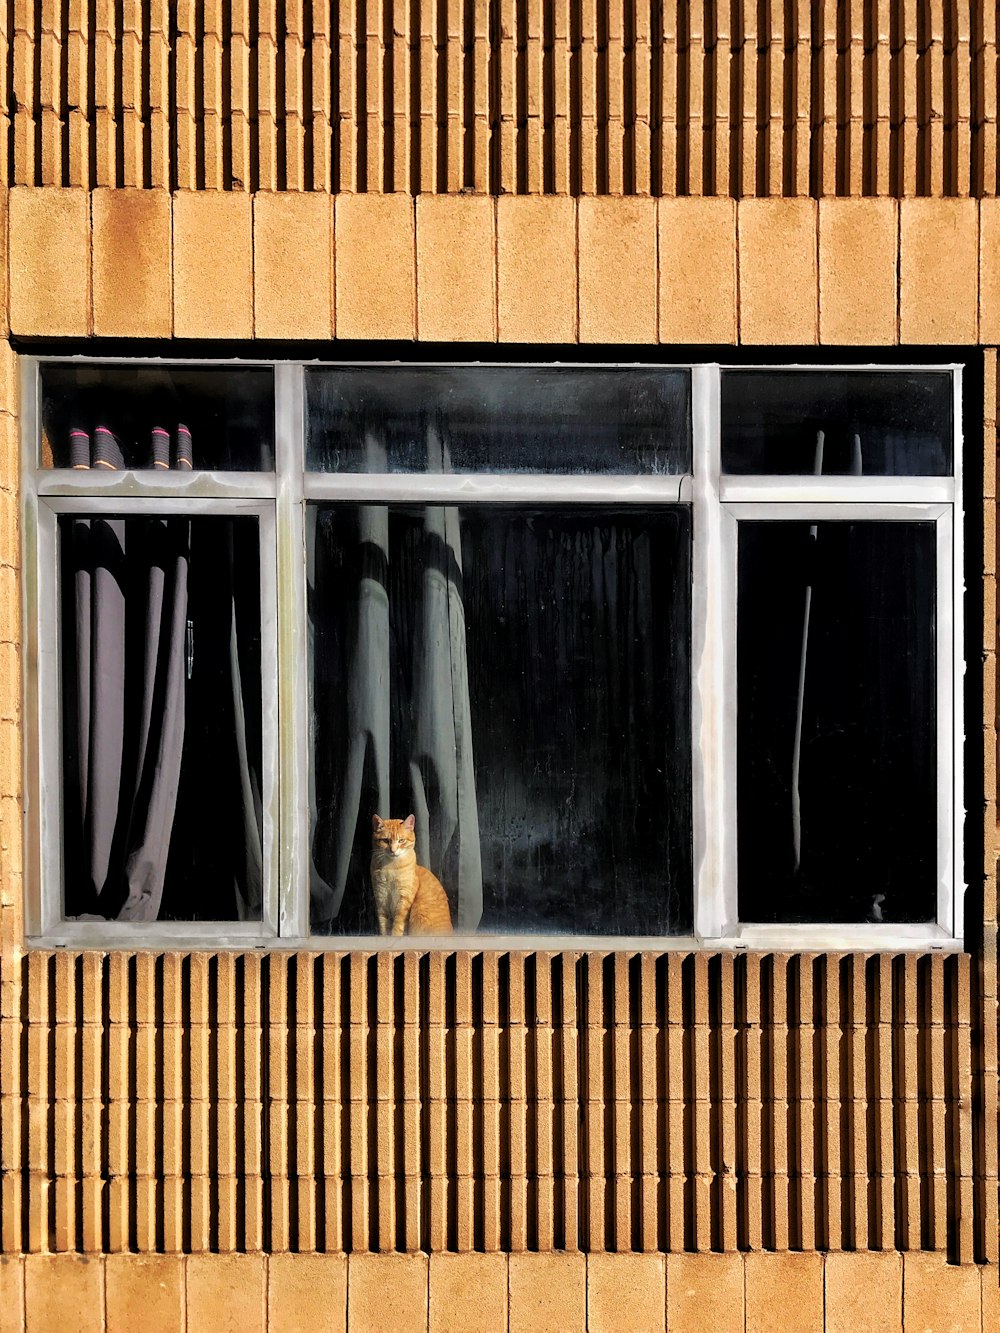 orange tabby standing on window